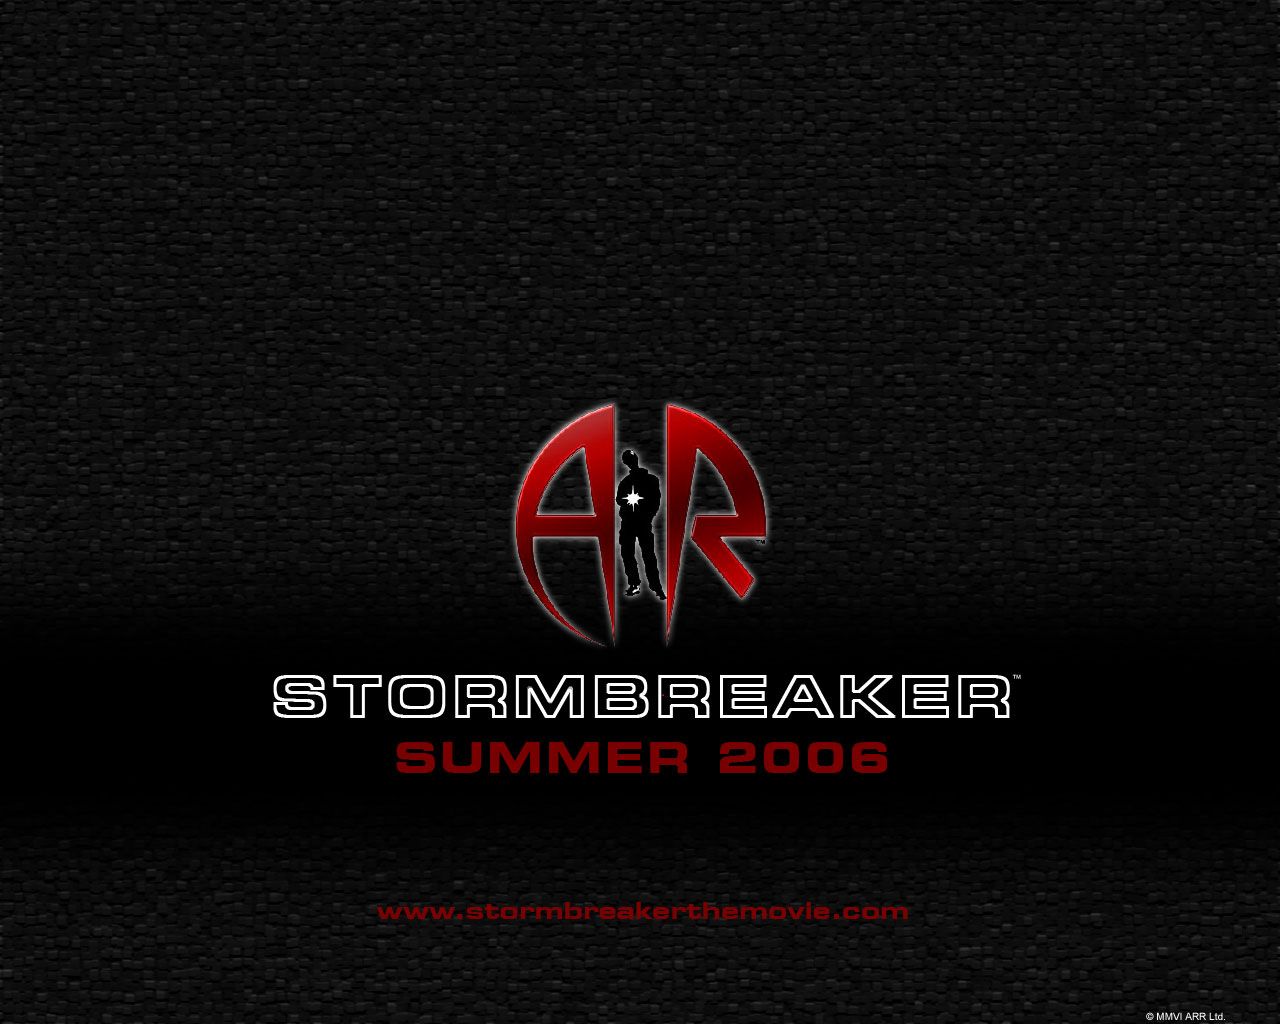 Alex Rider Stormbreaker, 2006 < Movies < Entertainment